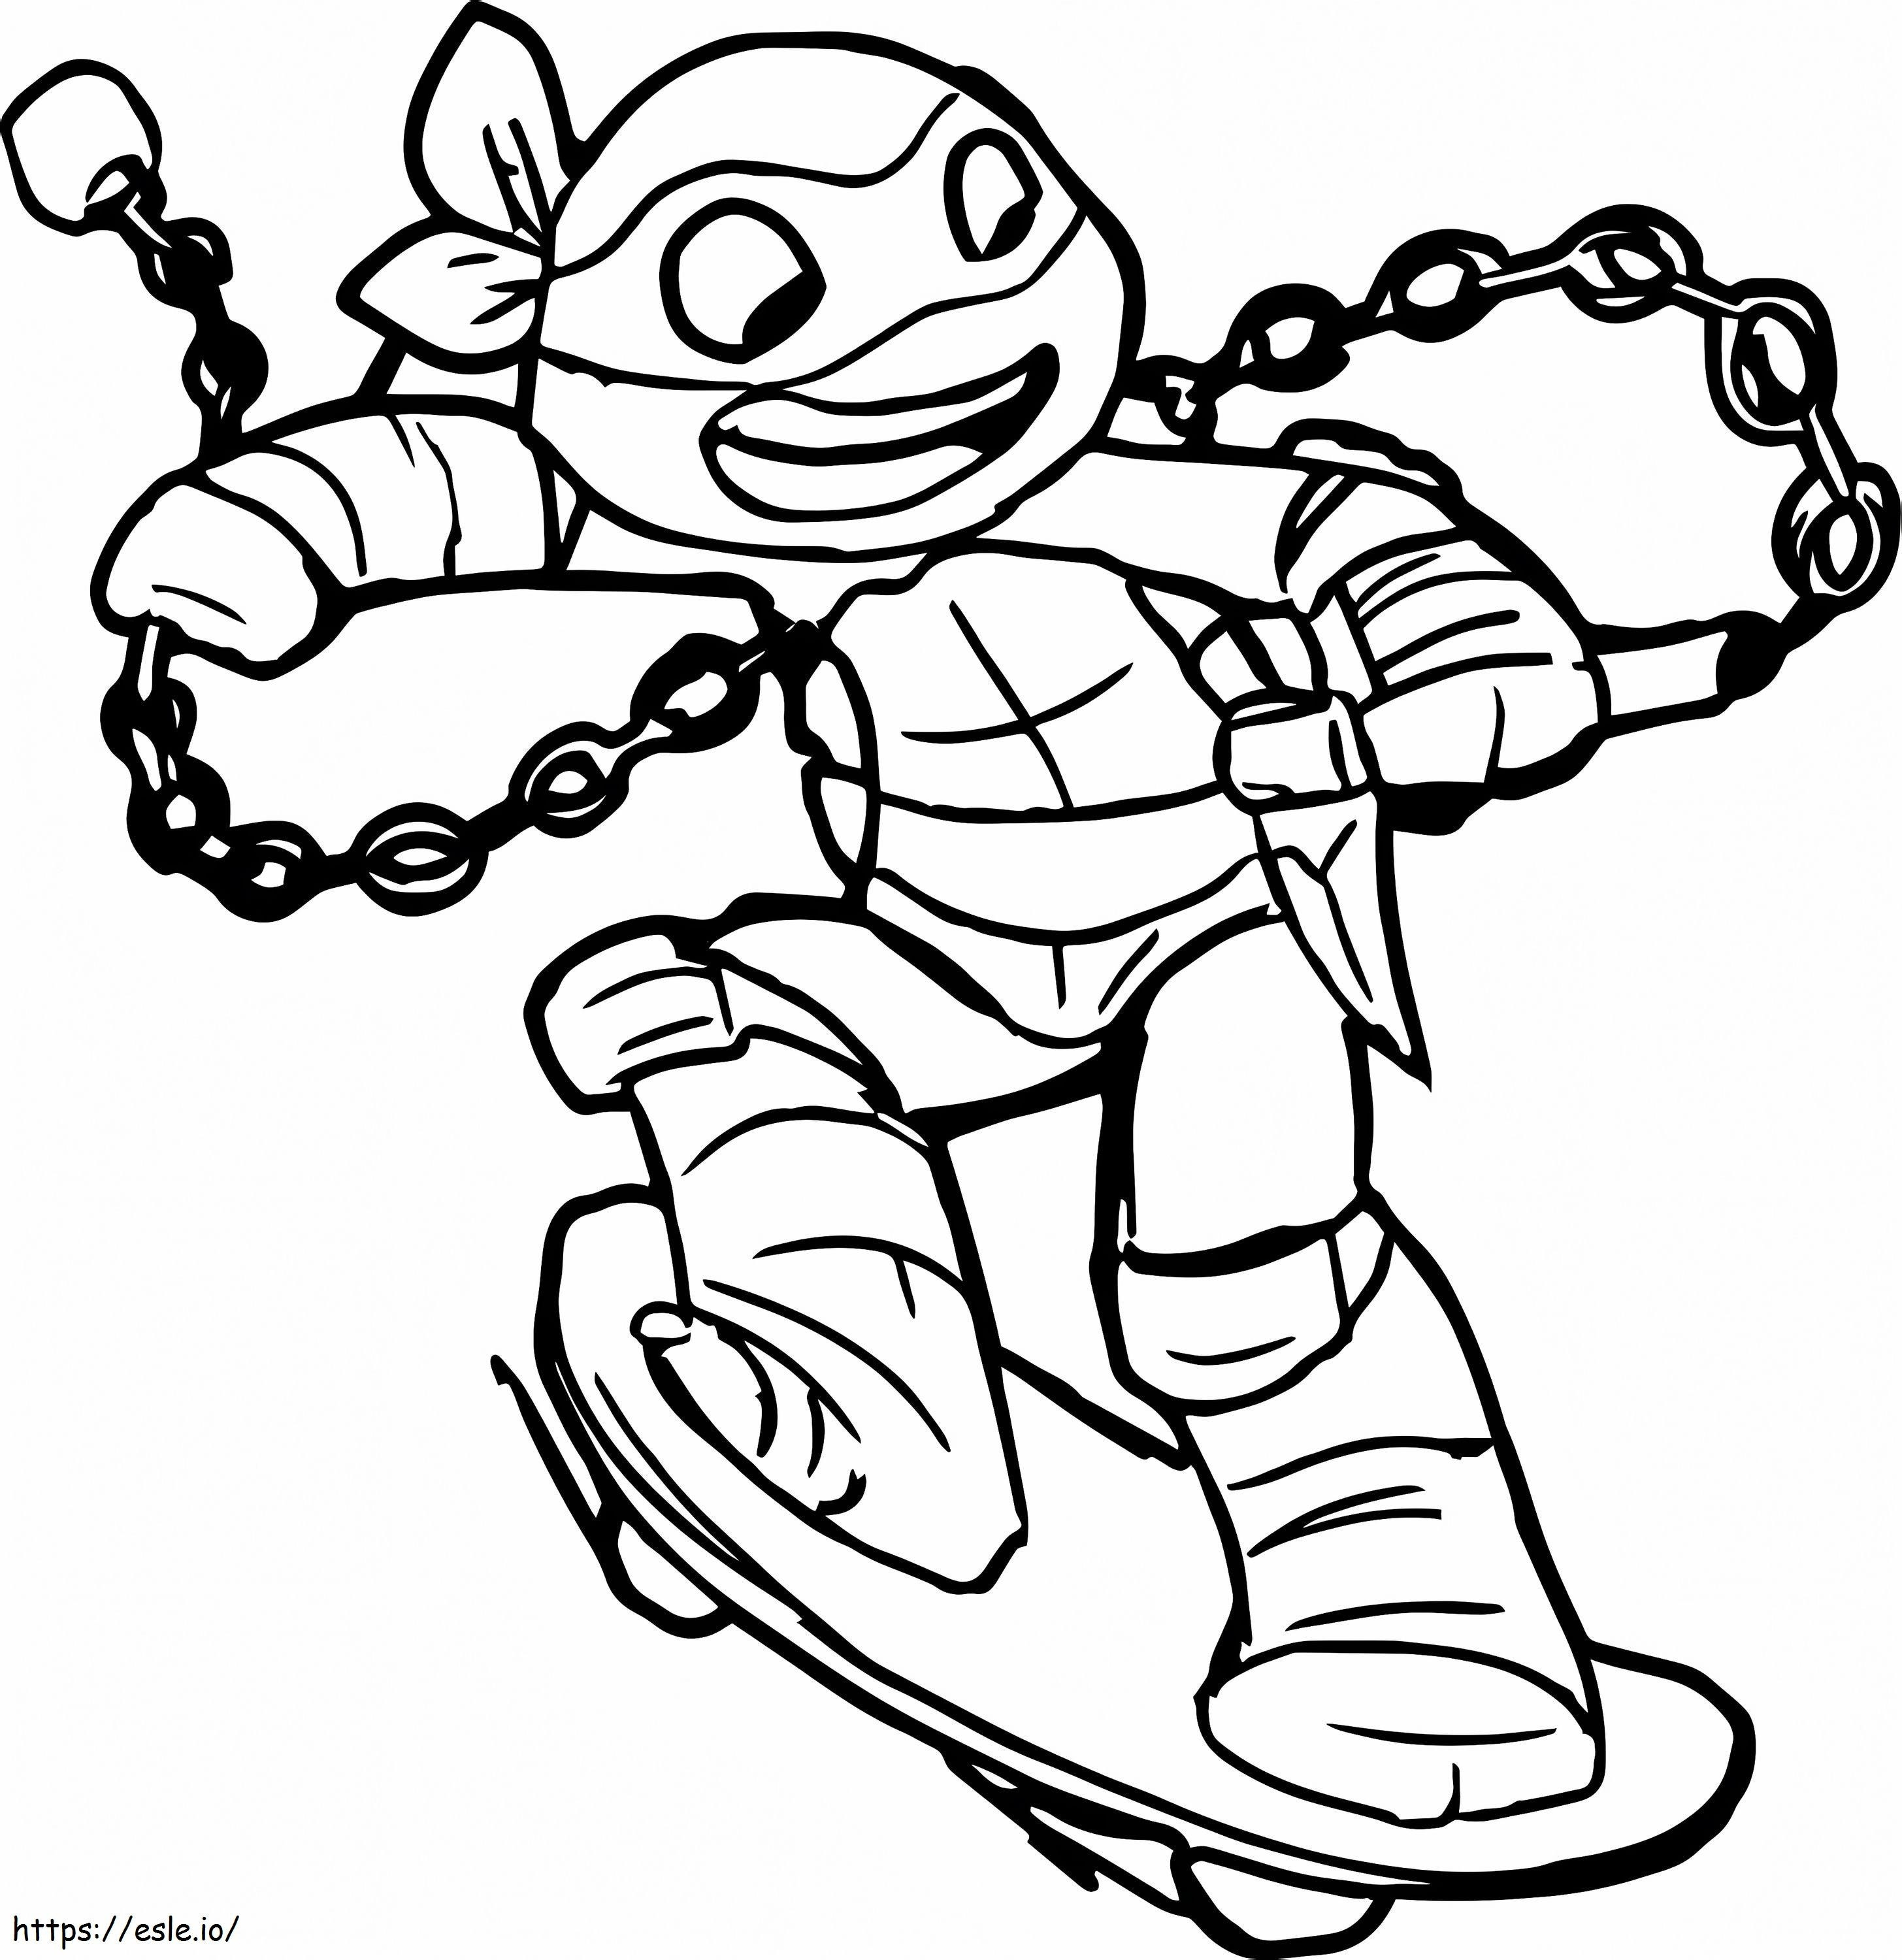 1532140232 Ninja Turtle Skateboarding A4 coloring page